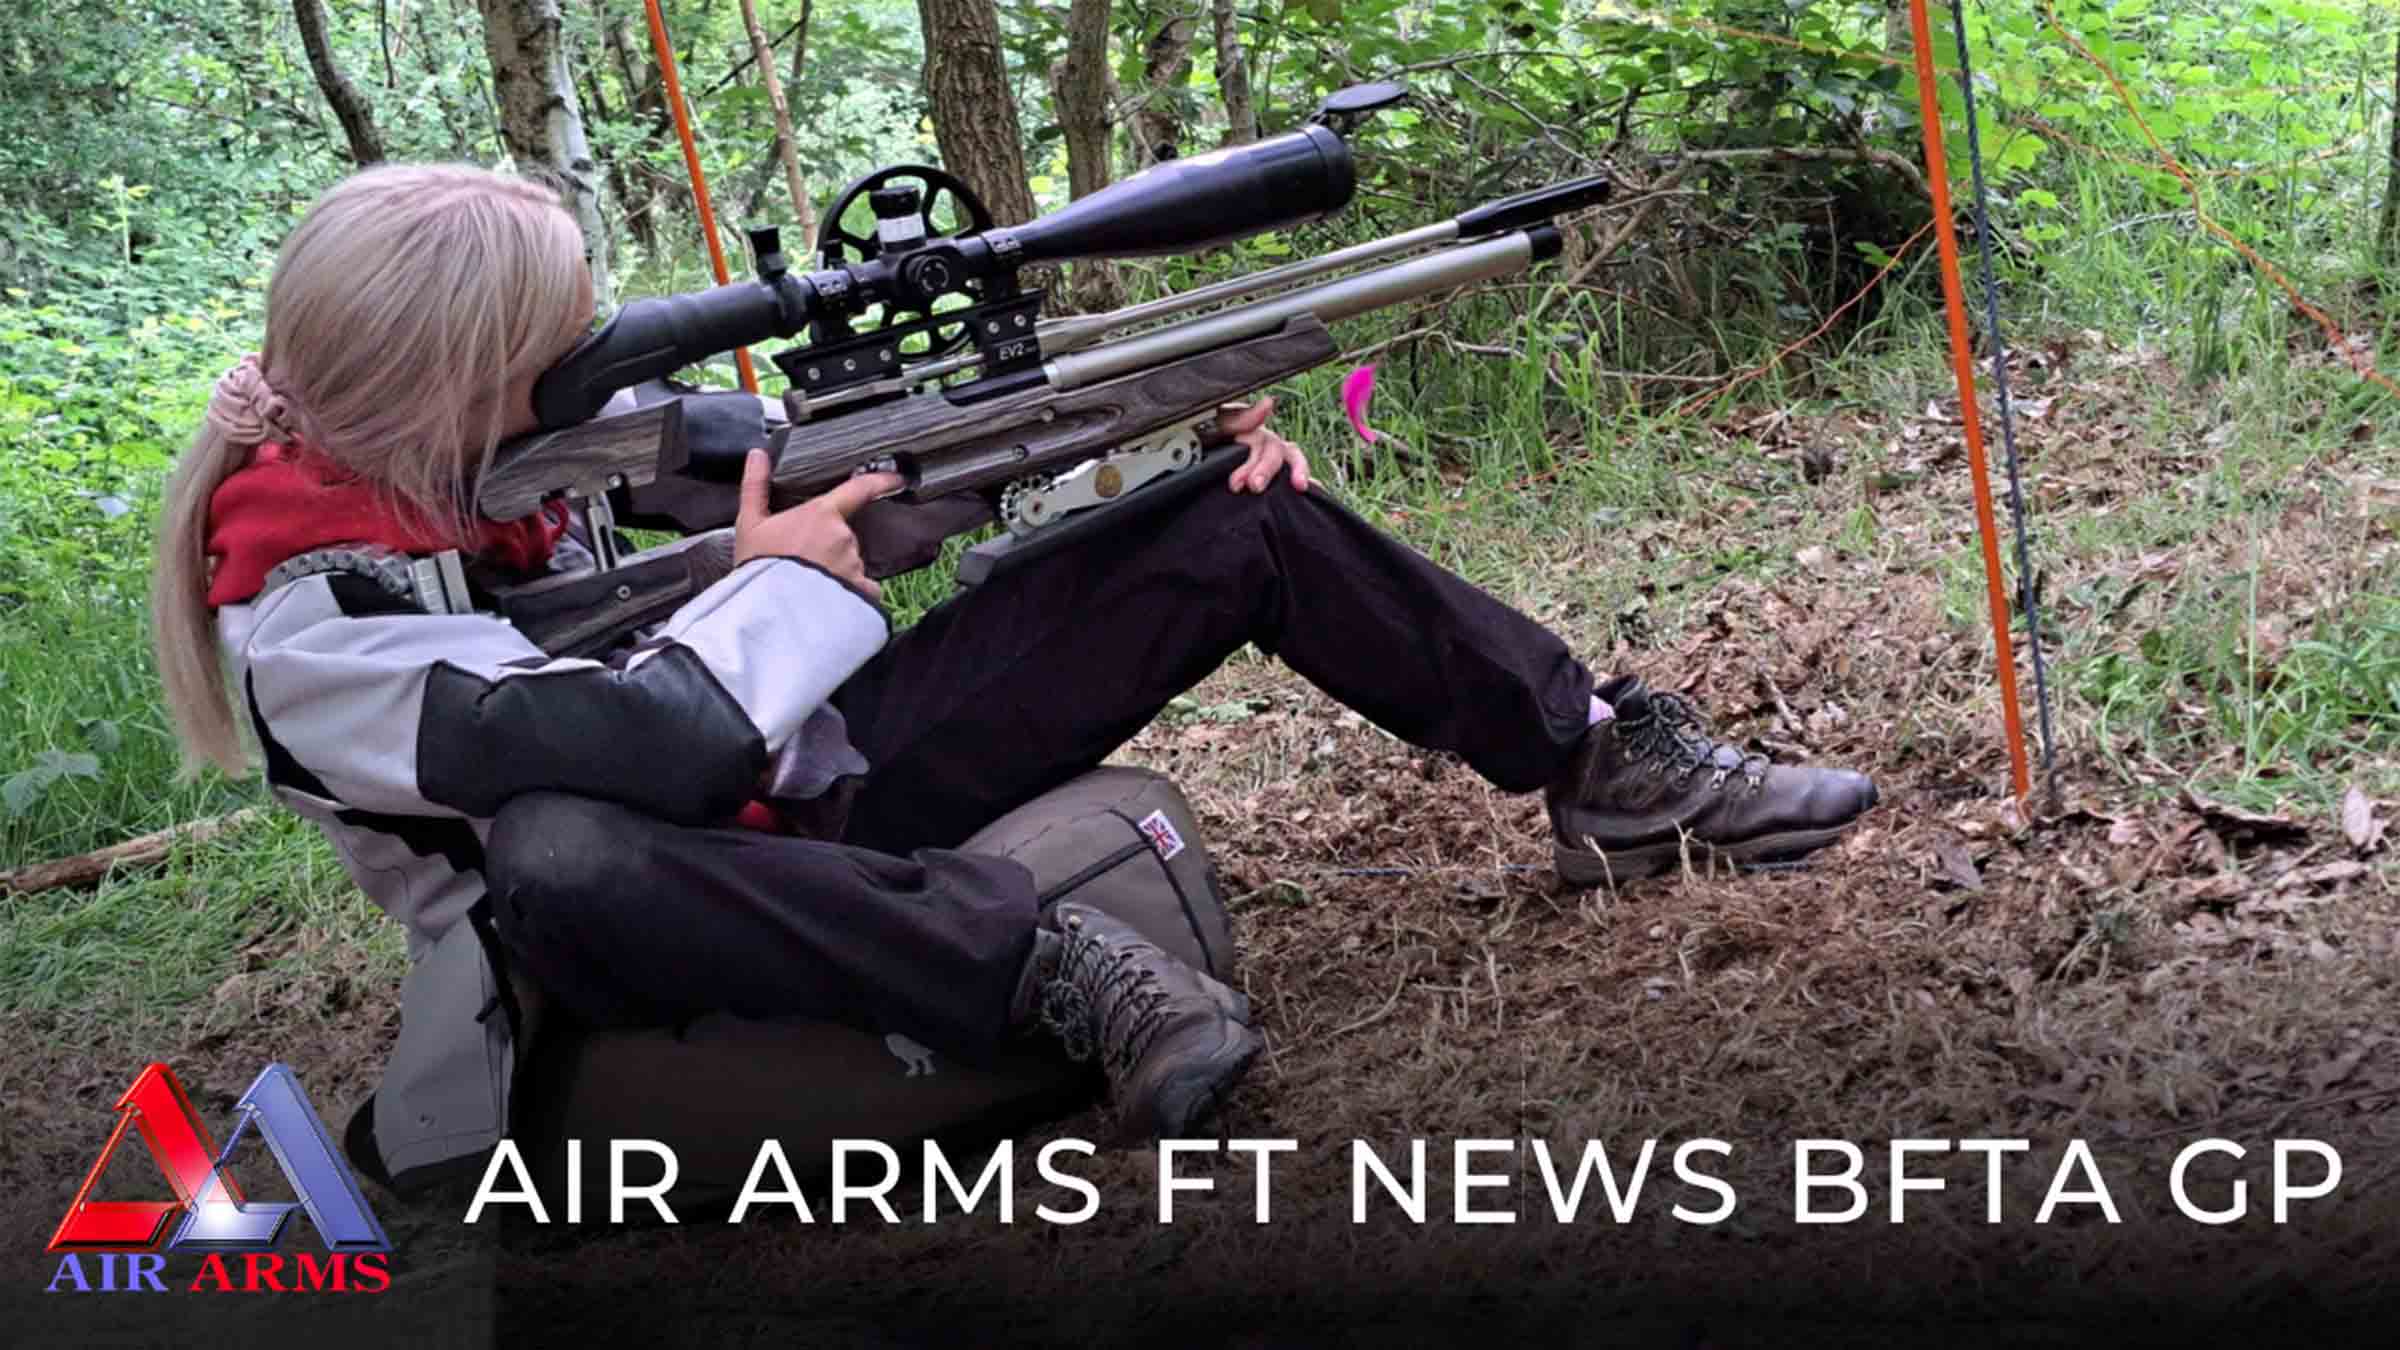 Air Arms FT news BFTA GP rounds 1 to 3